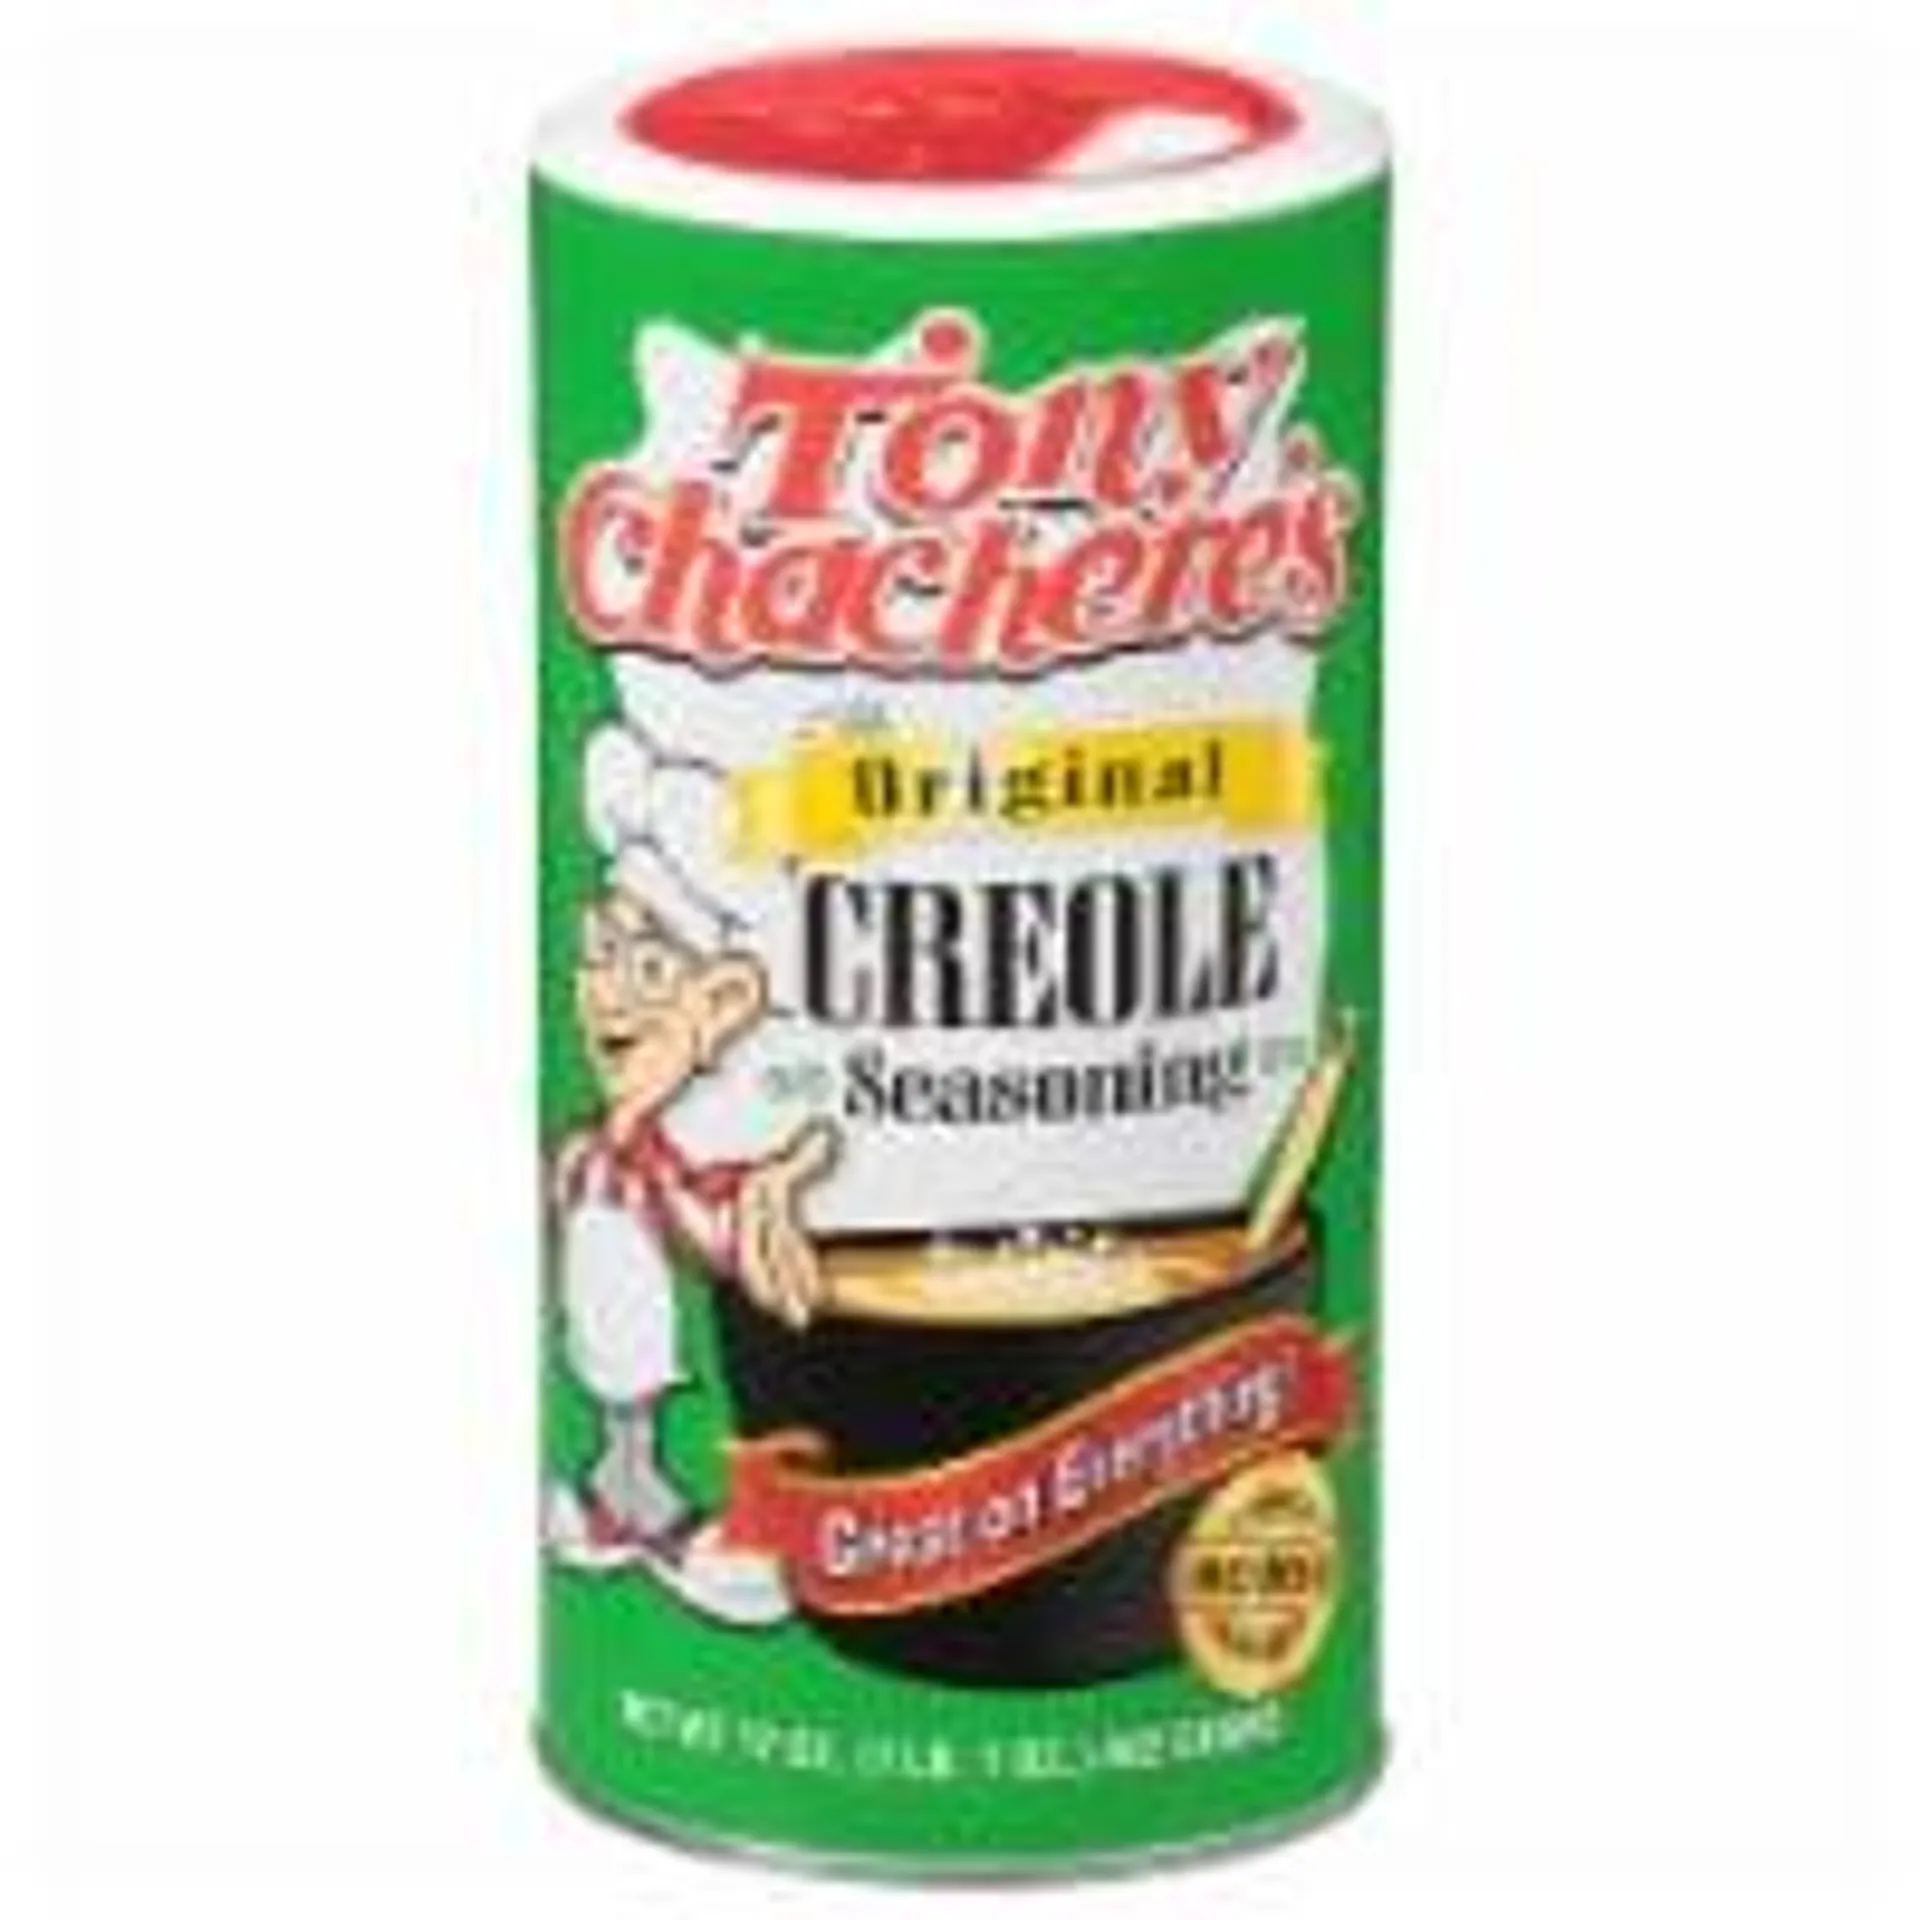 Tony Chachere's® Original Creole Seasoning